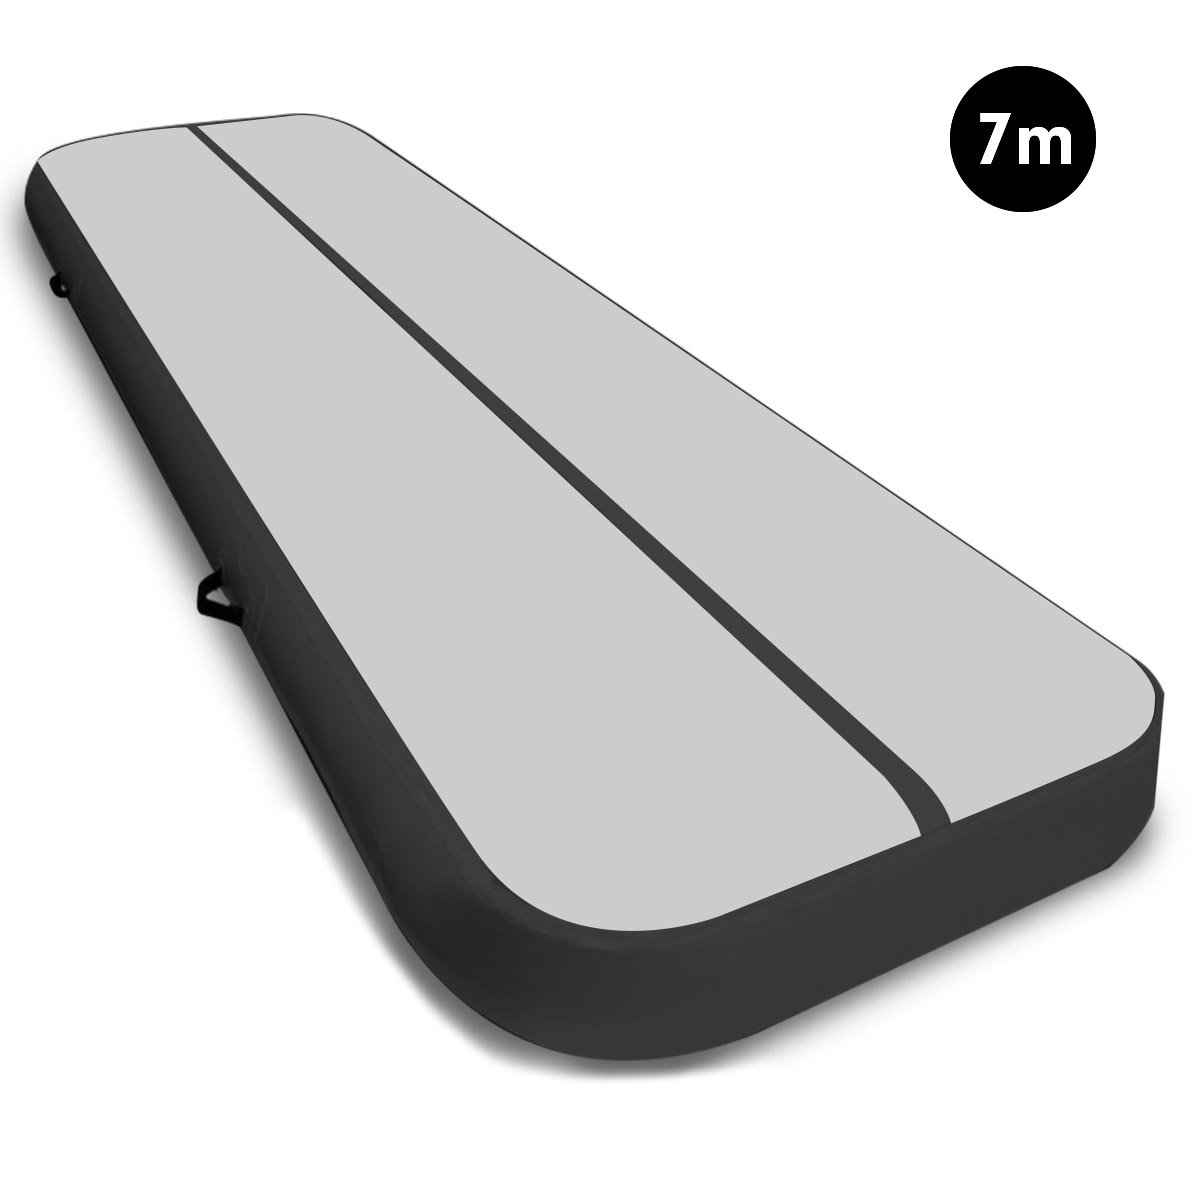 7m x 1m Air Track Inflatable Tumbling Mat Gymnastics - Grey Black 2